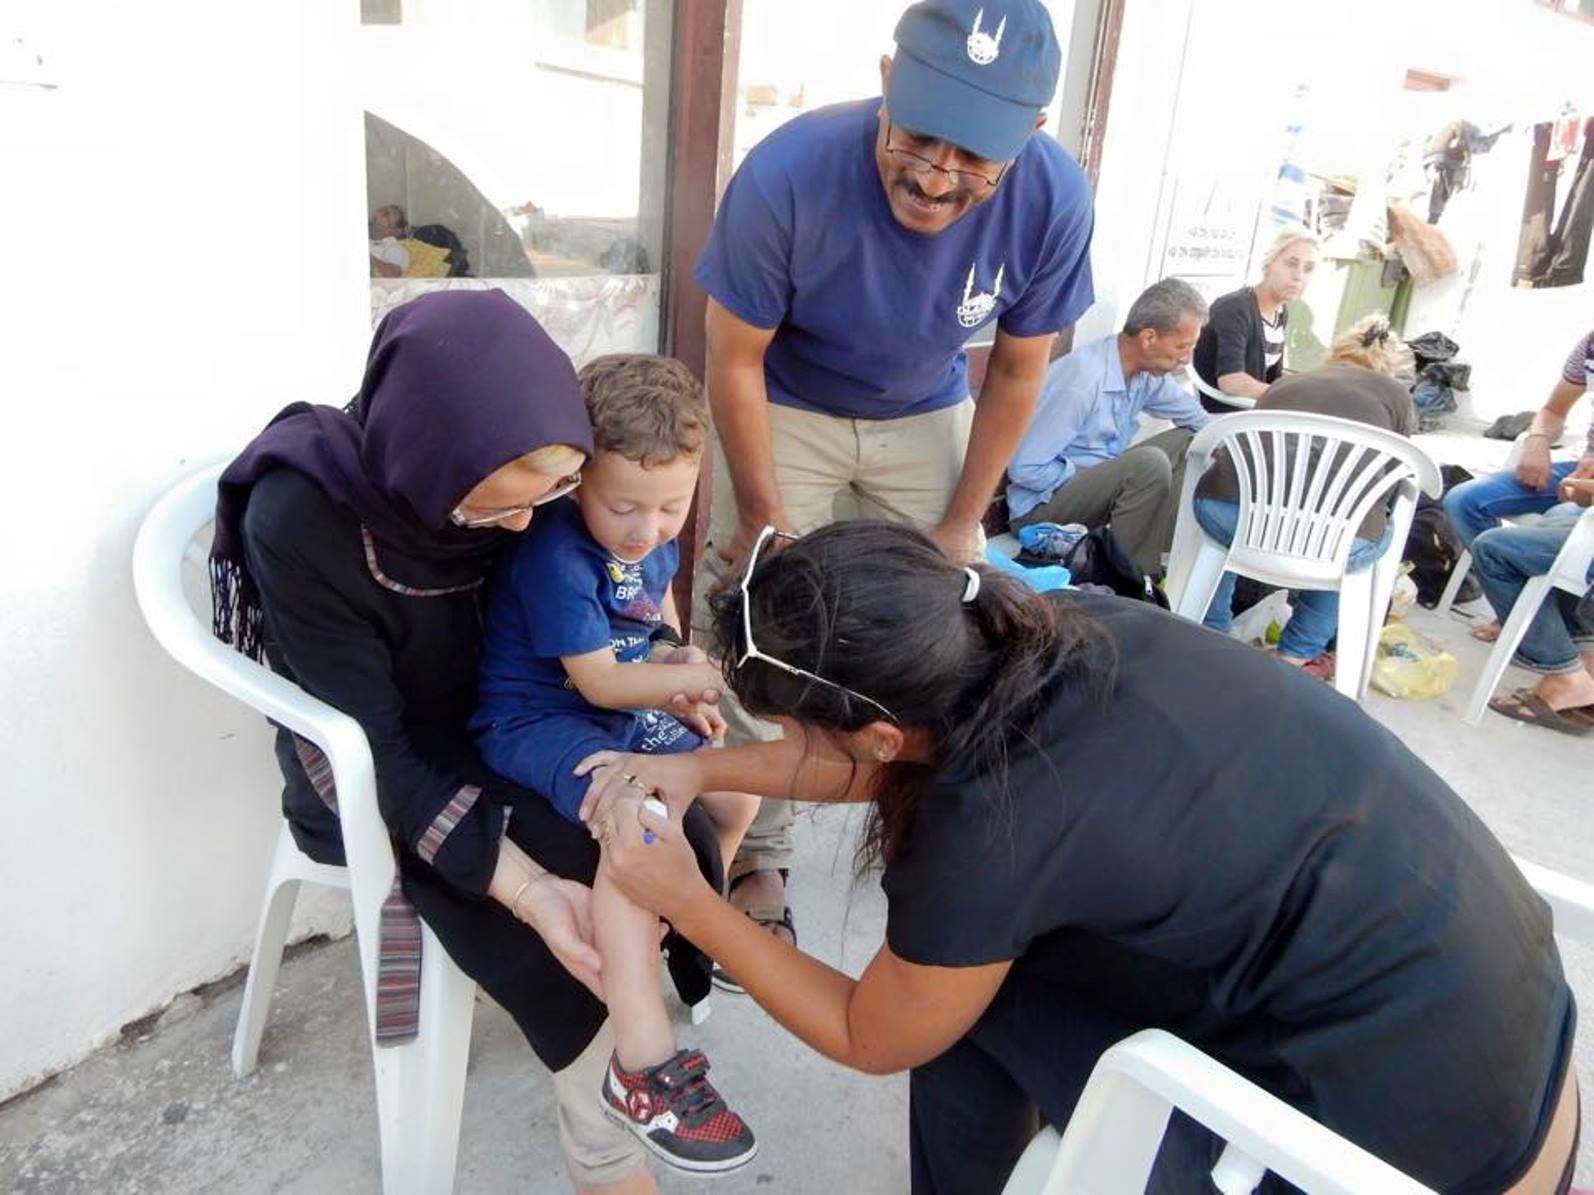 An IsraAID volunteer providing first aid in Greece. Photo via Facebook